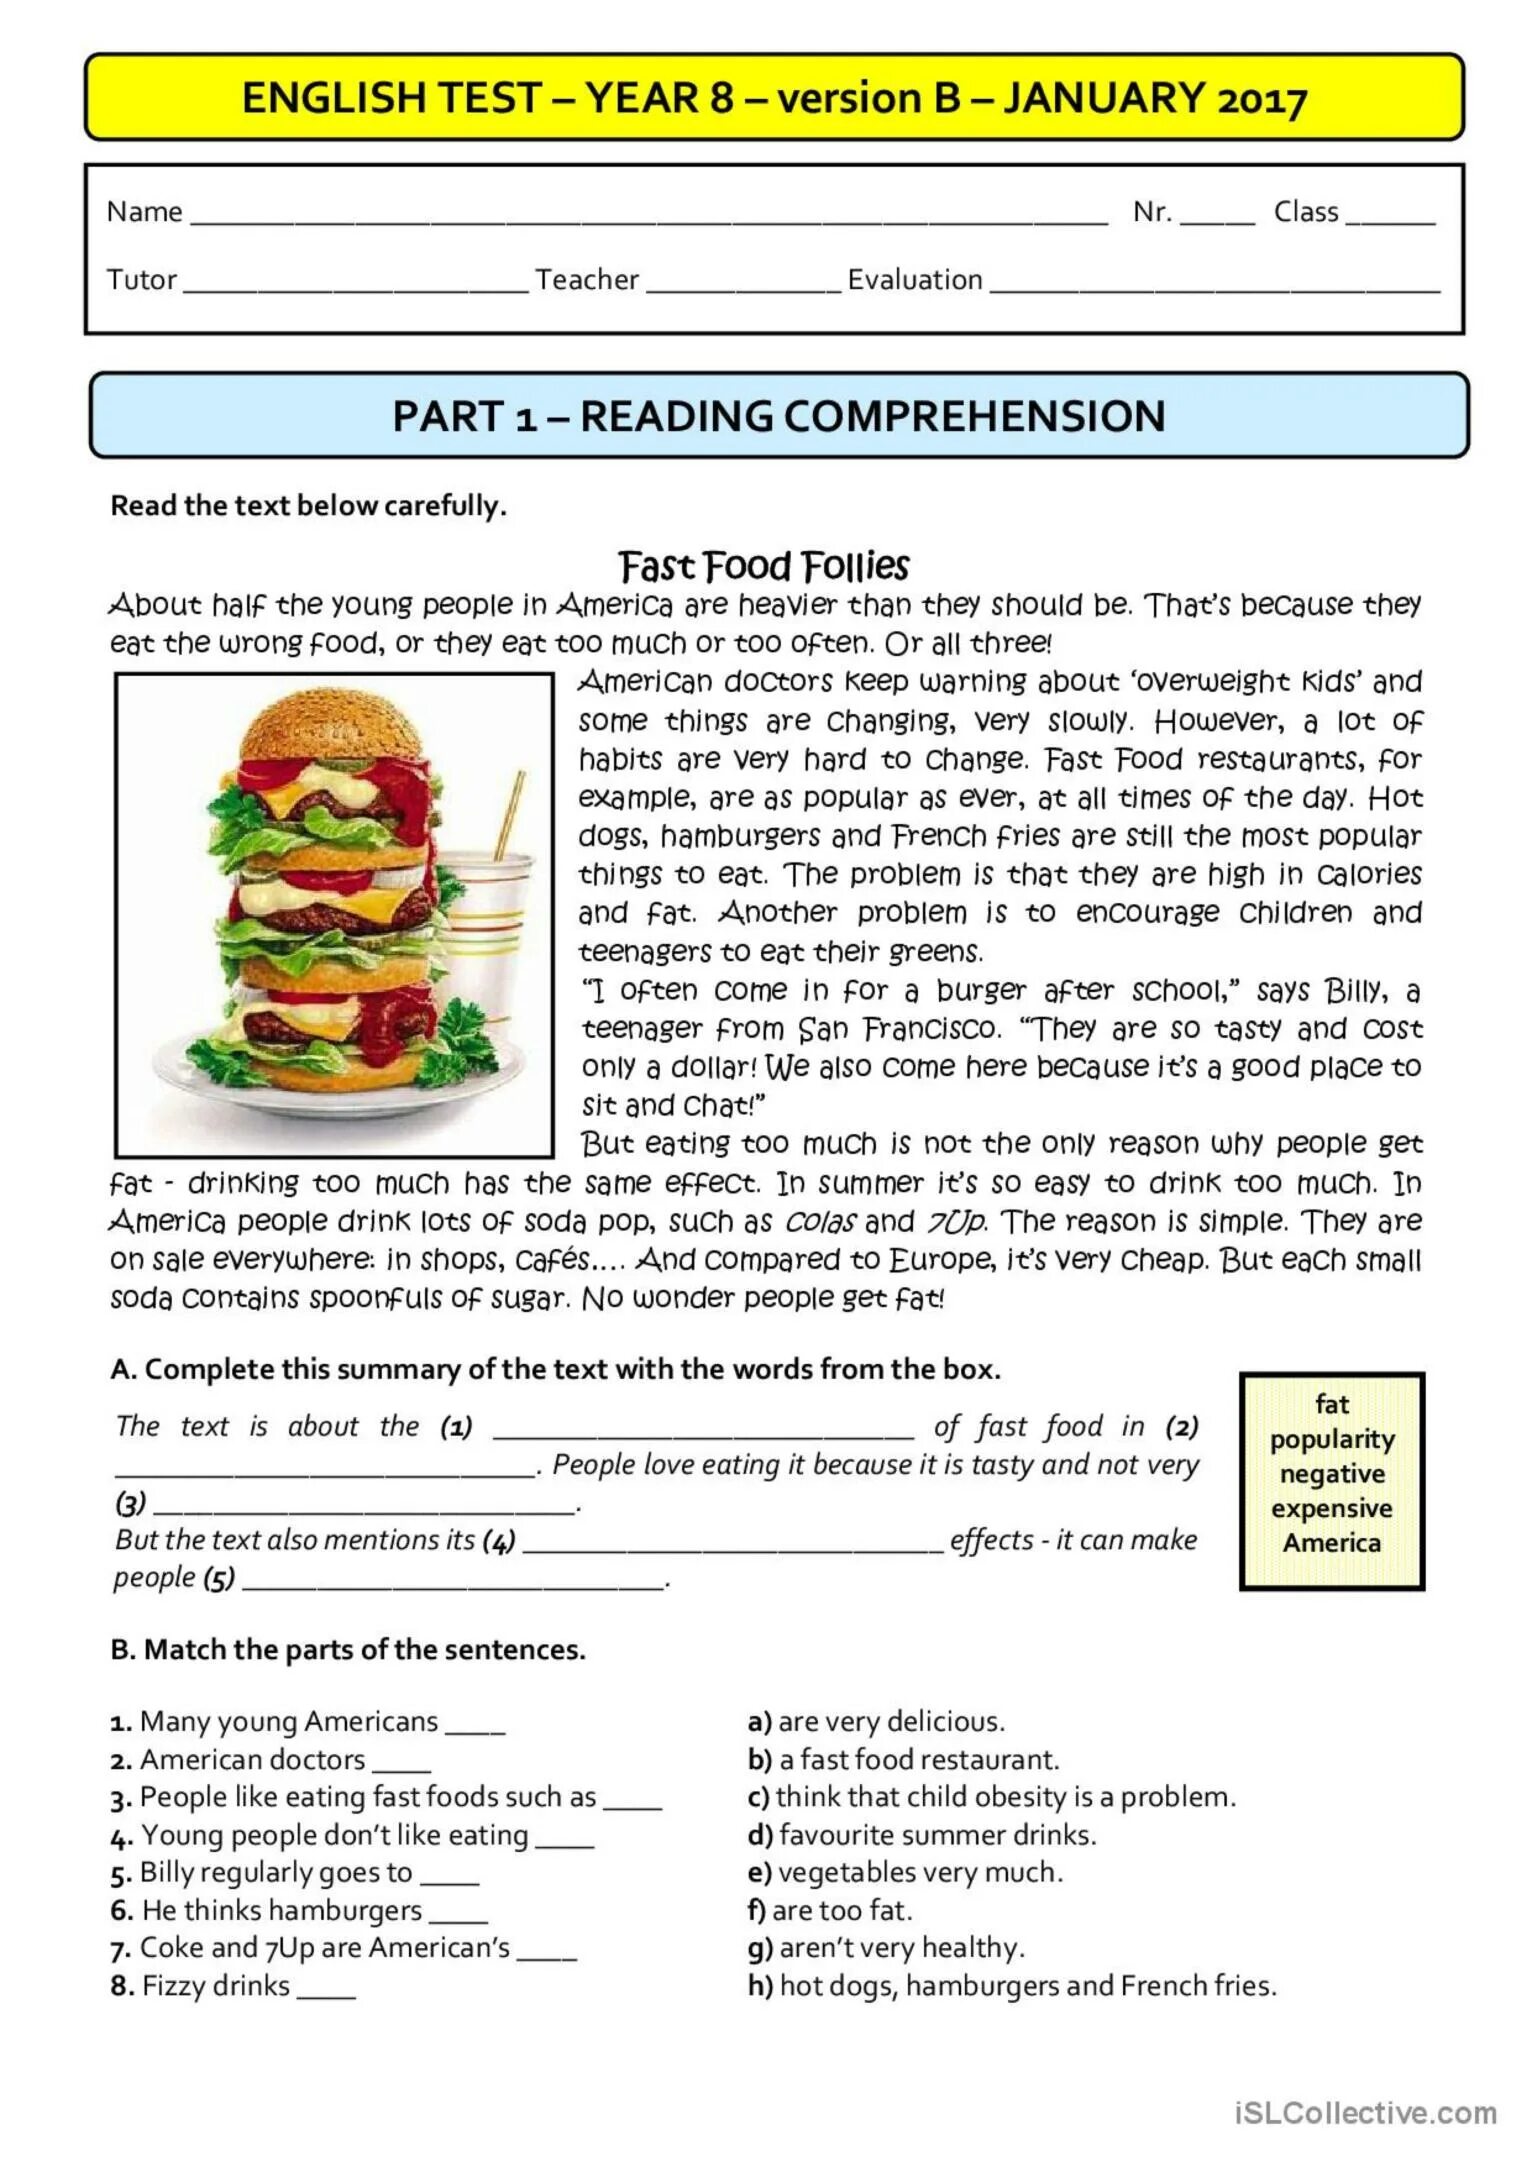 English txt. Reading Comprehension английский. Фаст фуд на английском. Reading Comprehension тесты. Food reading Comprehension.